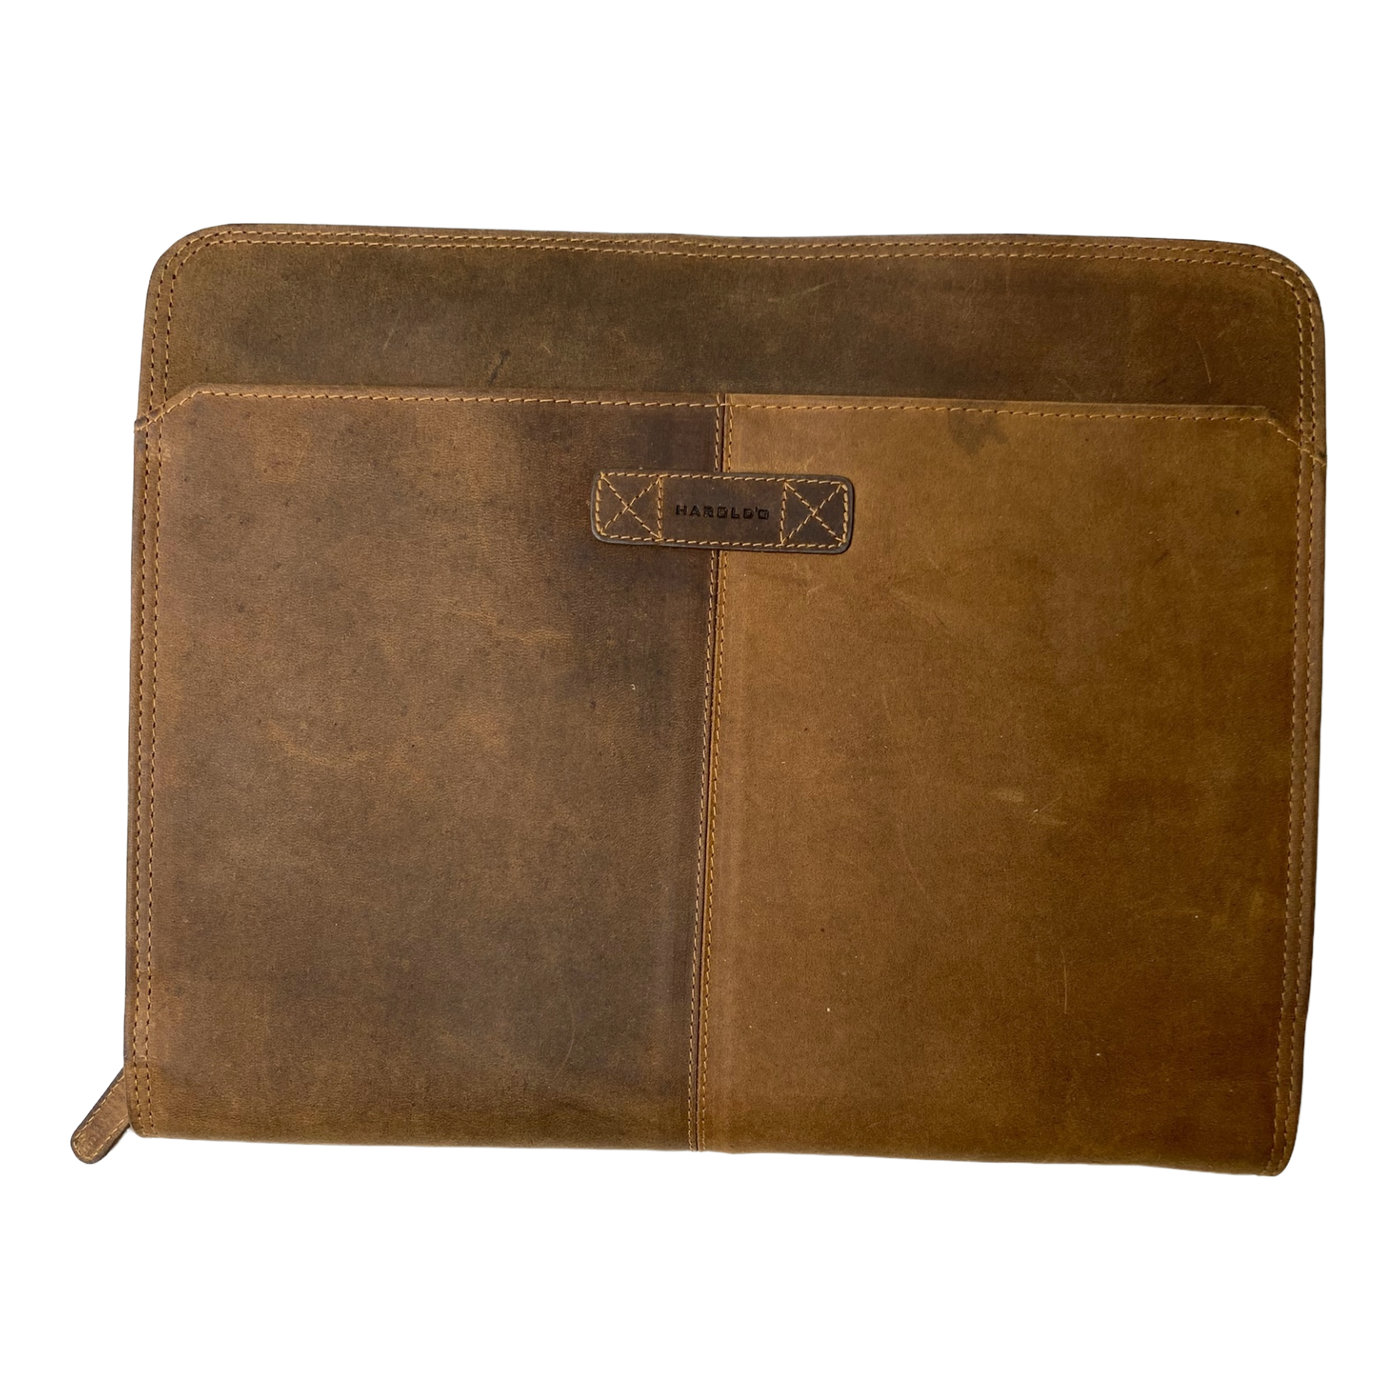 Harold's Bags document / laptop folder leather, natural